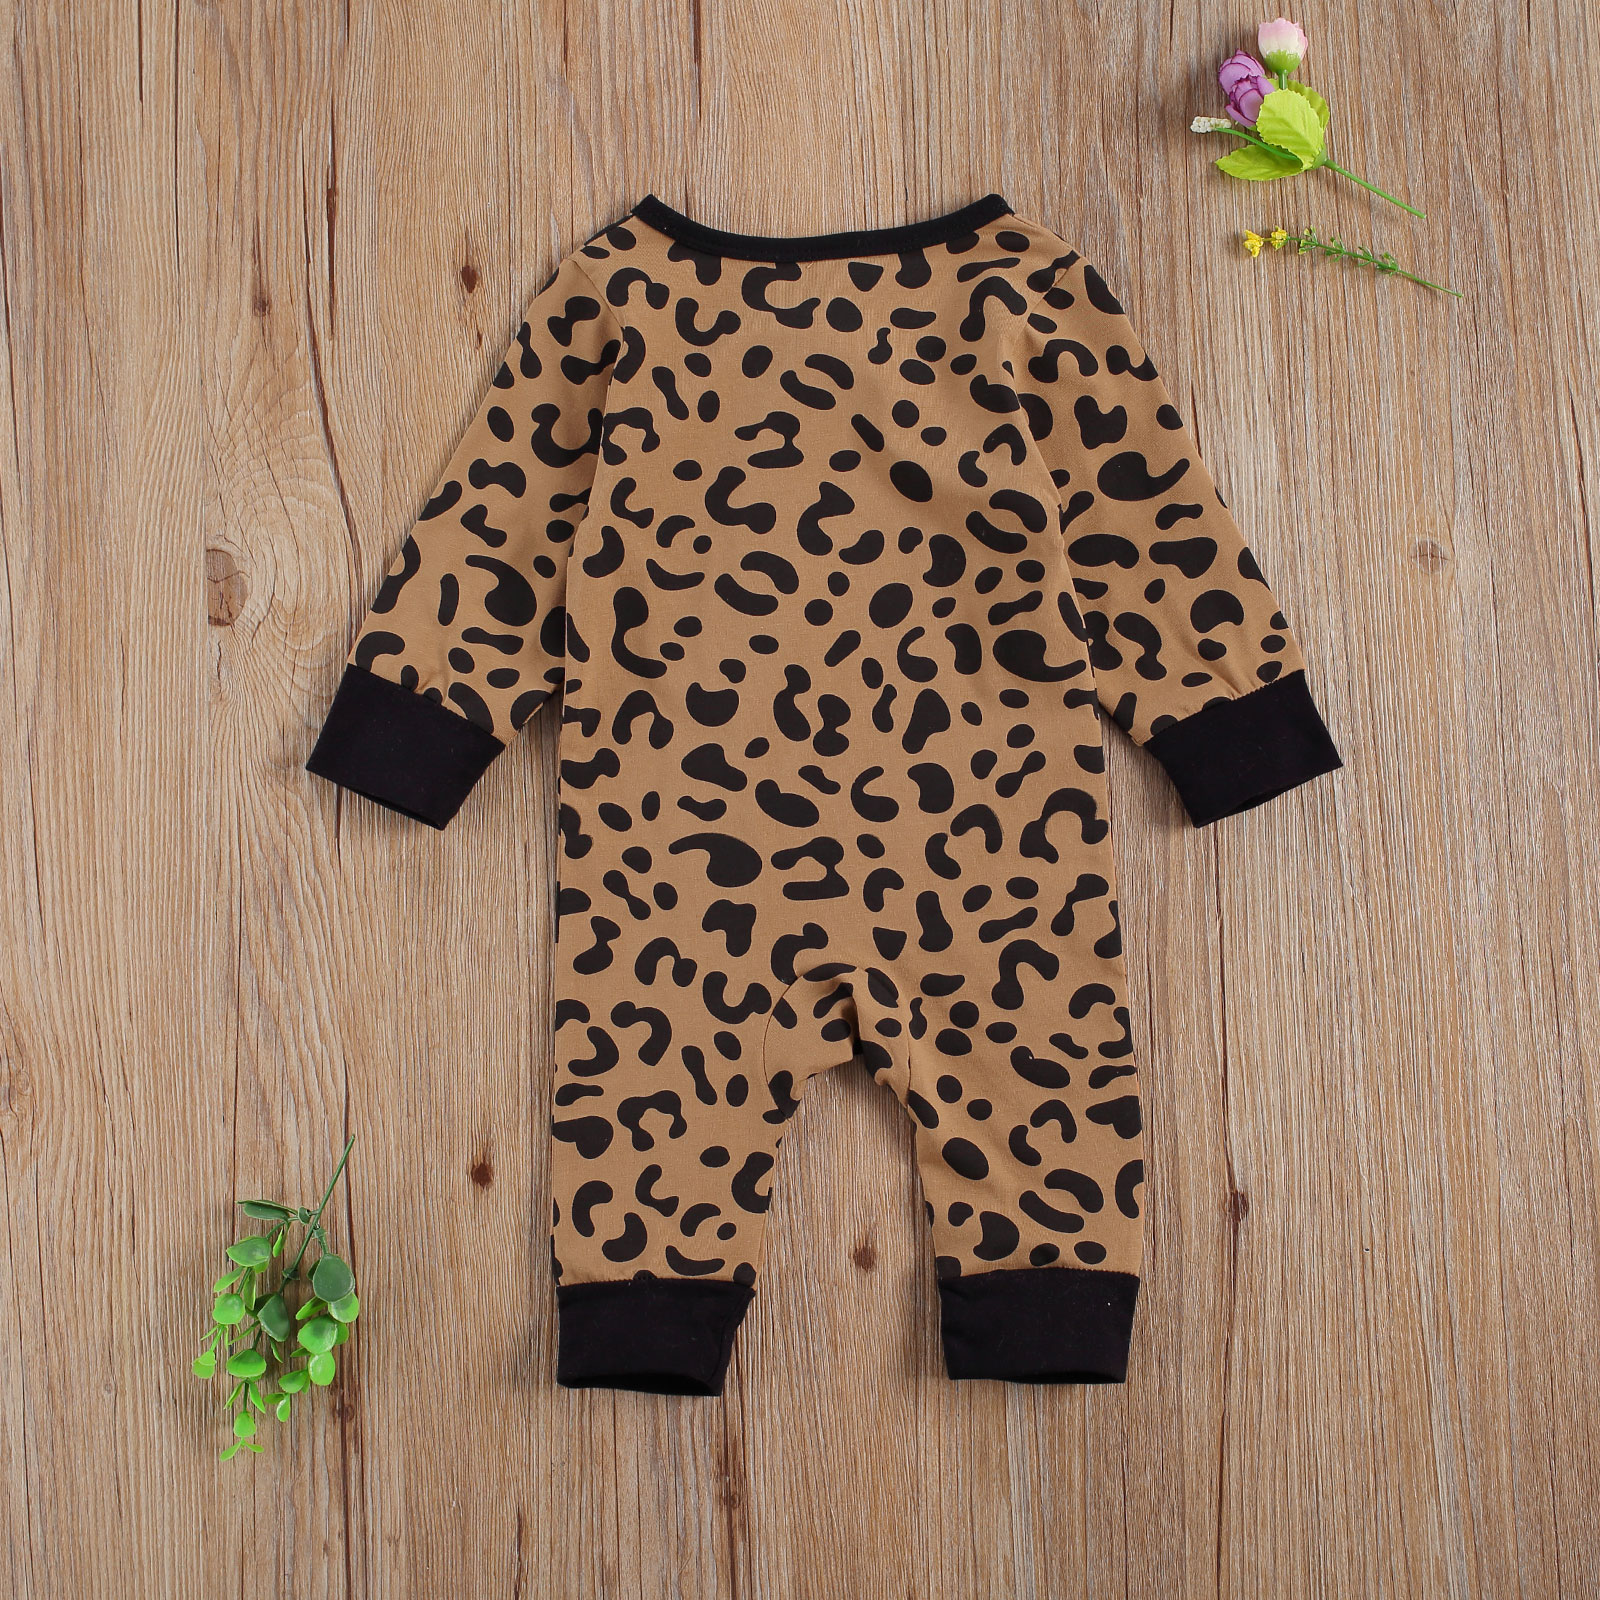 FOCUSNORM 0-18M Autumn Newborn Baby Girls Boys Rompers Leopard/Camouflage Print Long Sleeve Zipper Jumpsuits